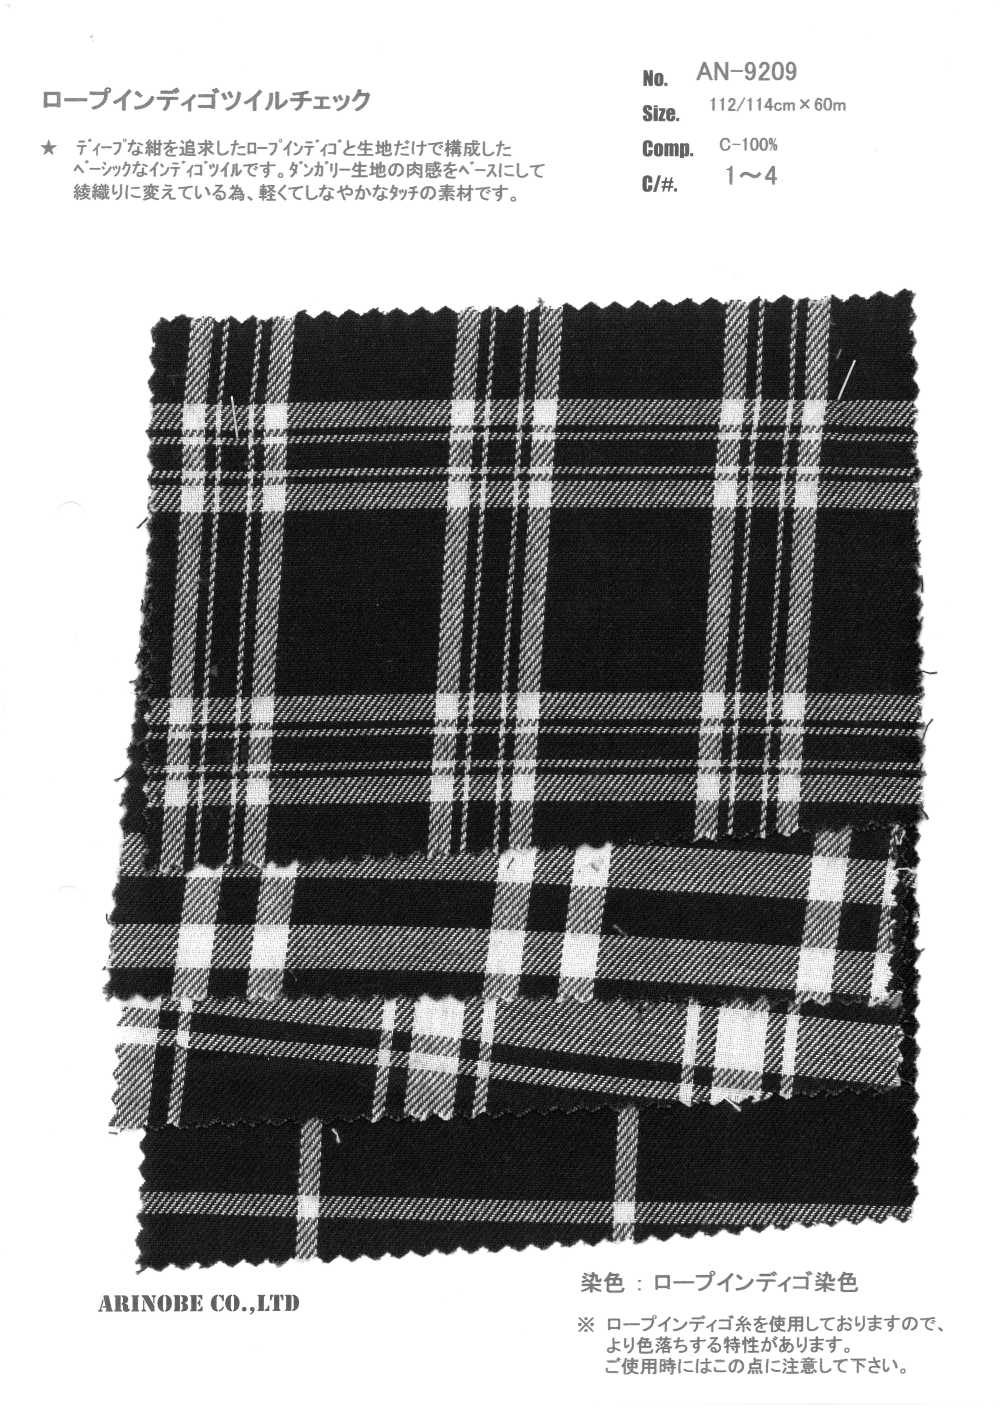 AN-9209 Rope Indigo Twill Check[Textile / Fabric] ARINOBE CO., LTD.